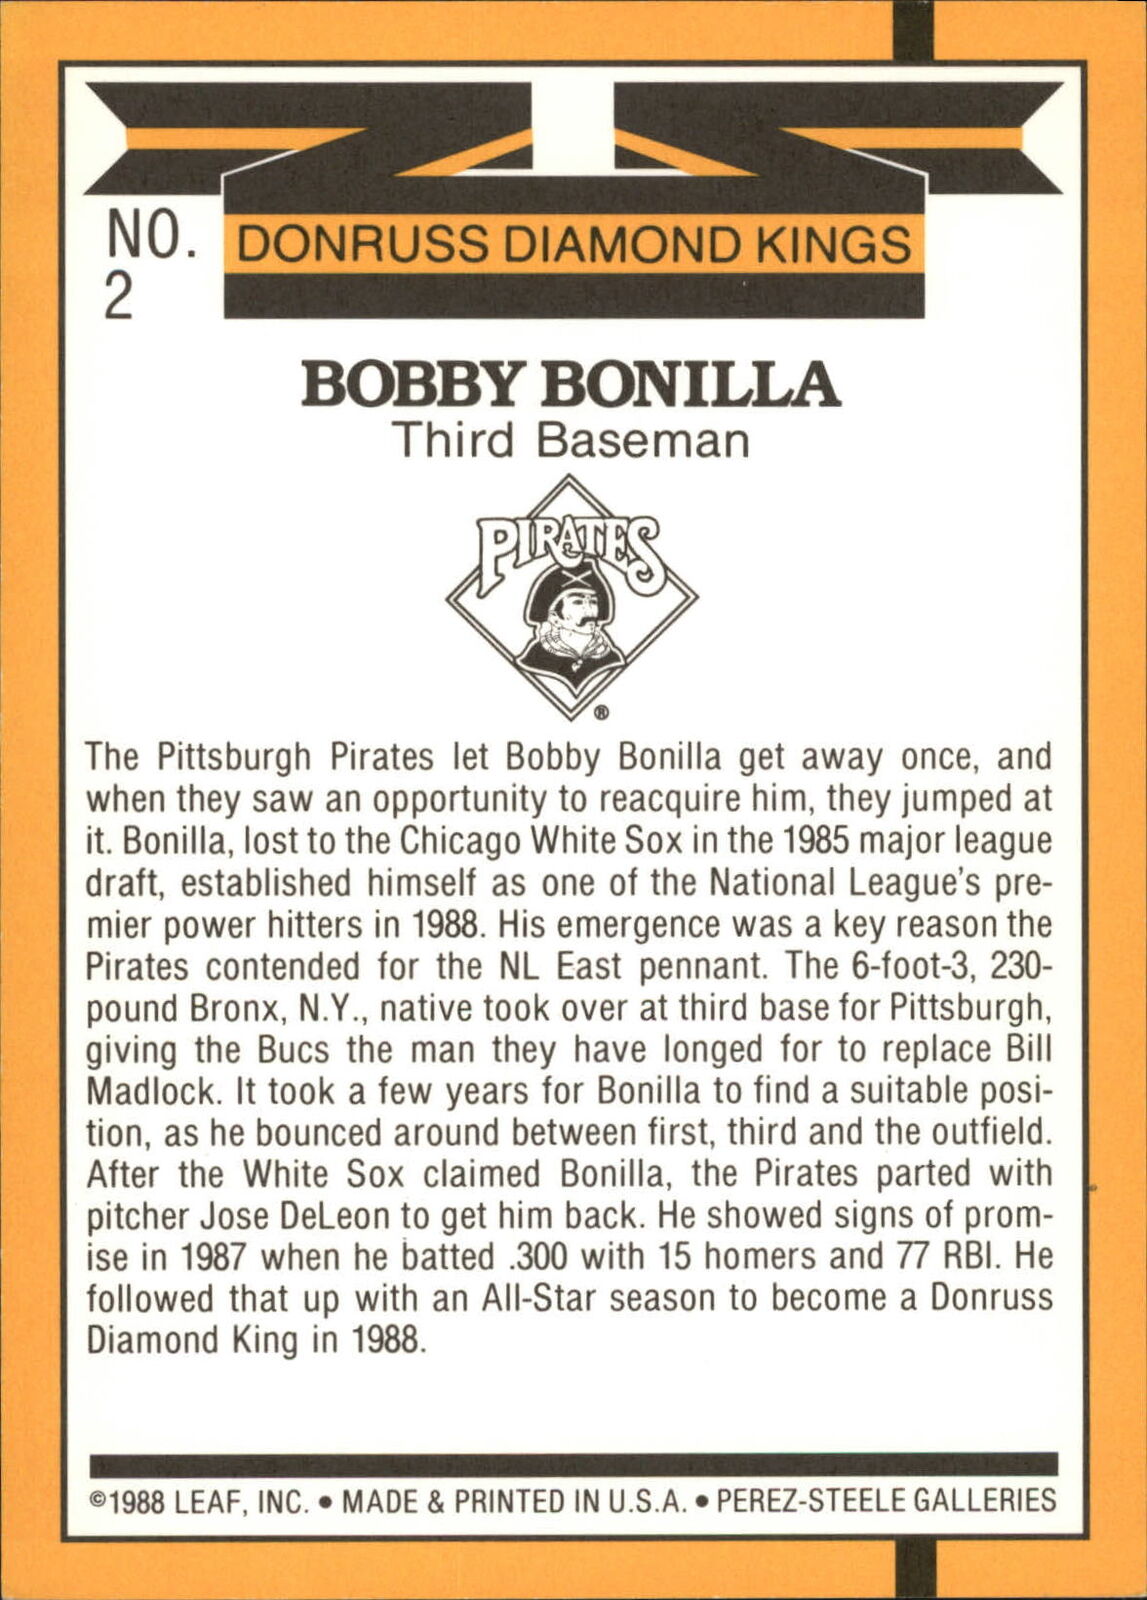 1989 Donruss Super DK's #2 Bobby Bonilla - NM